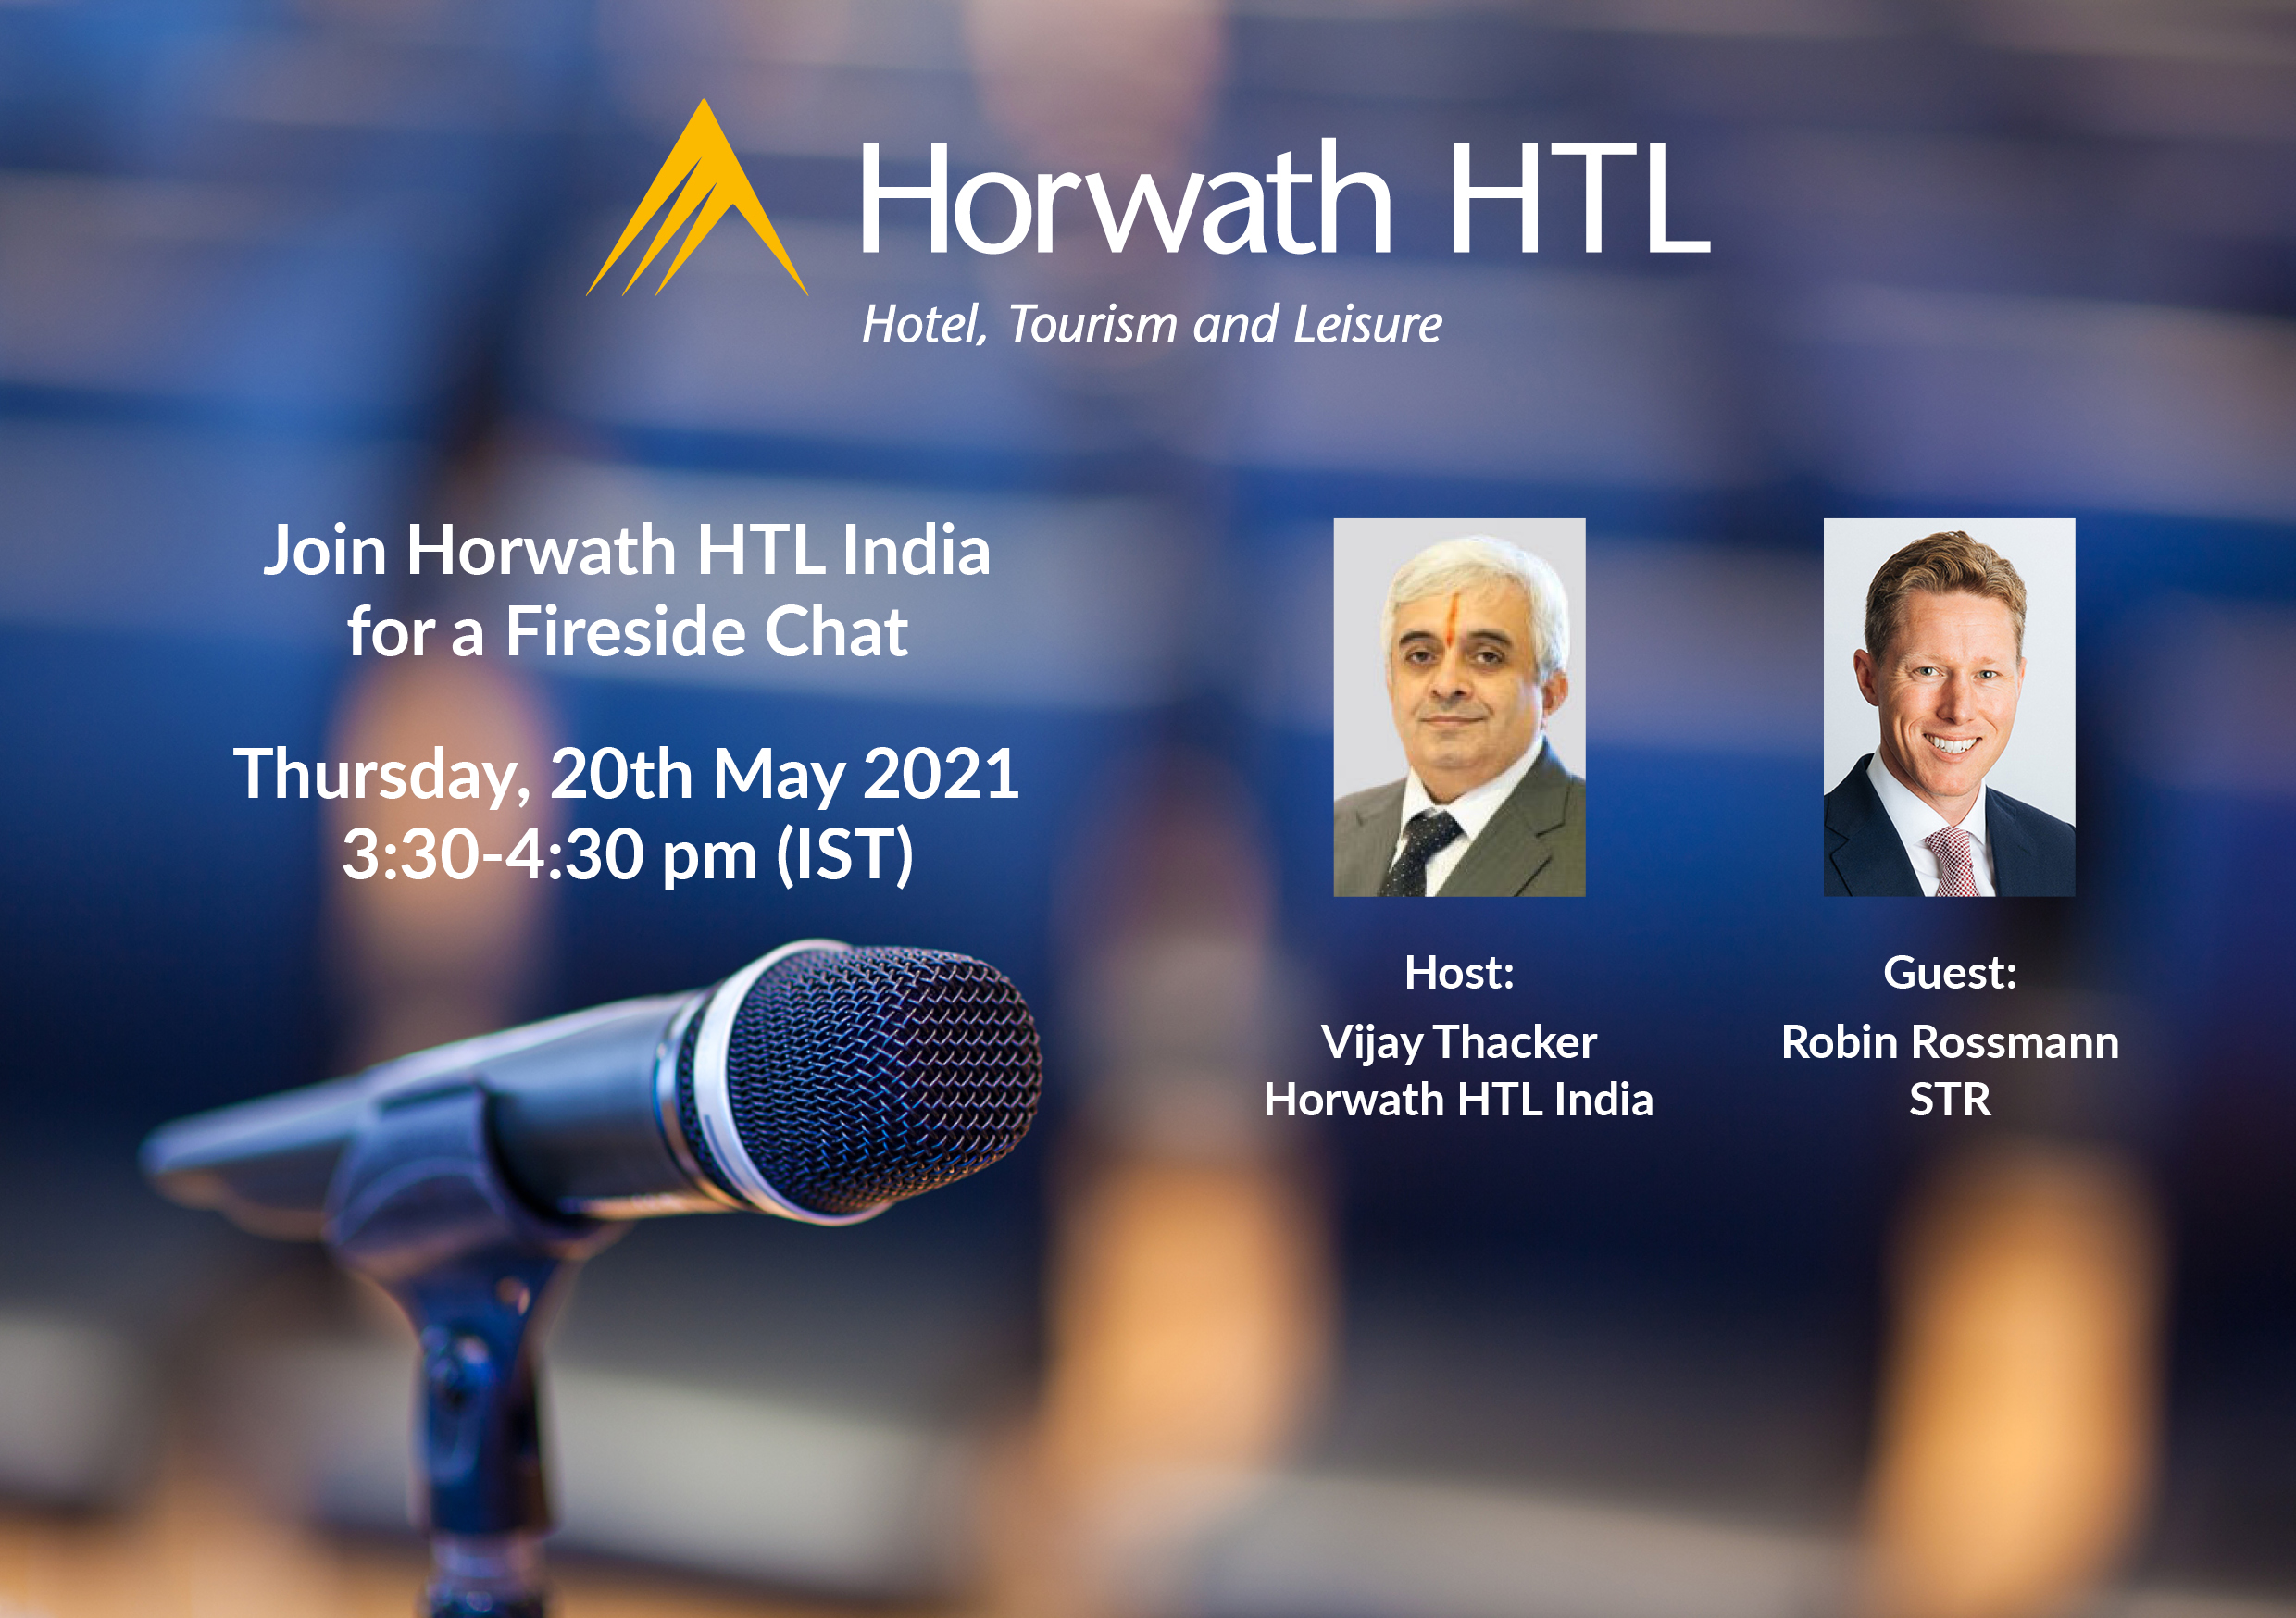 Horwath HTL India: A Fireside Chat with Robin Rossmann